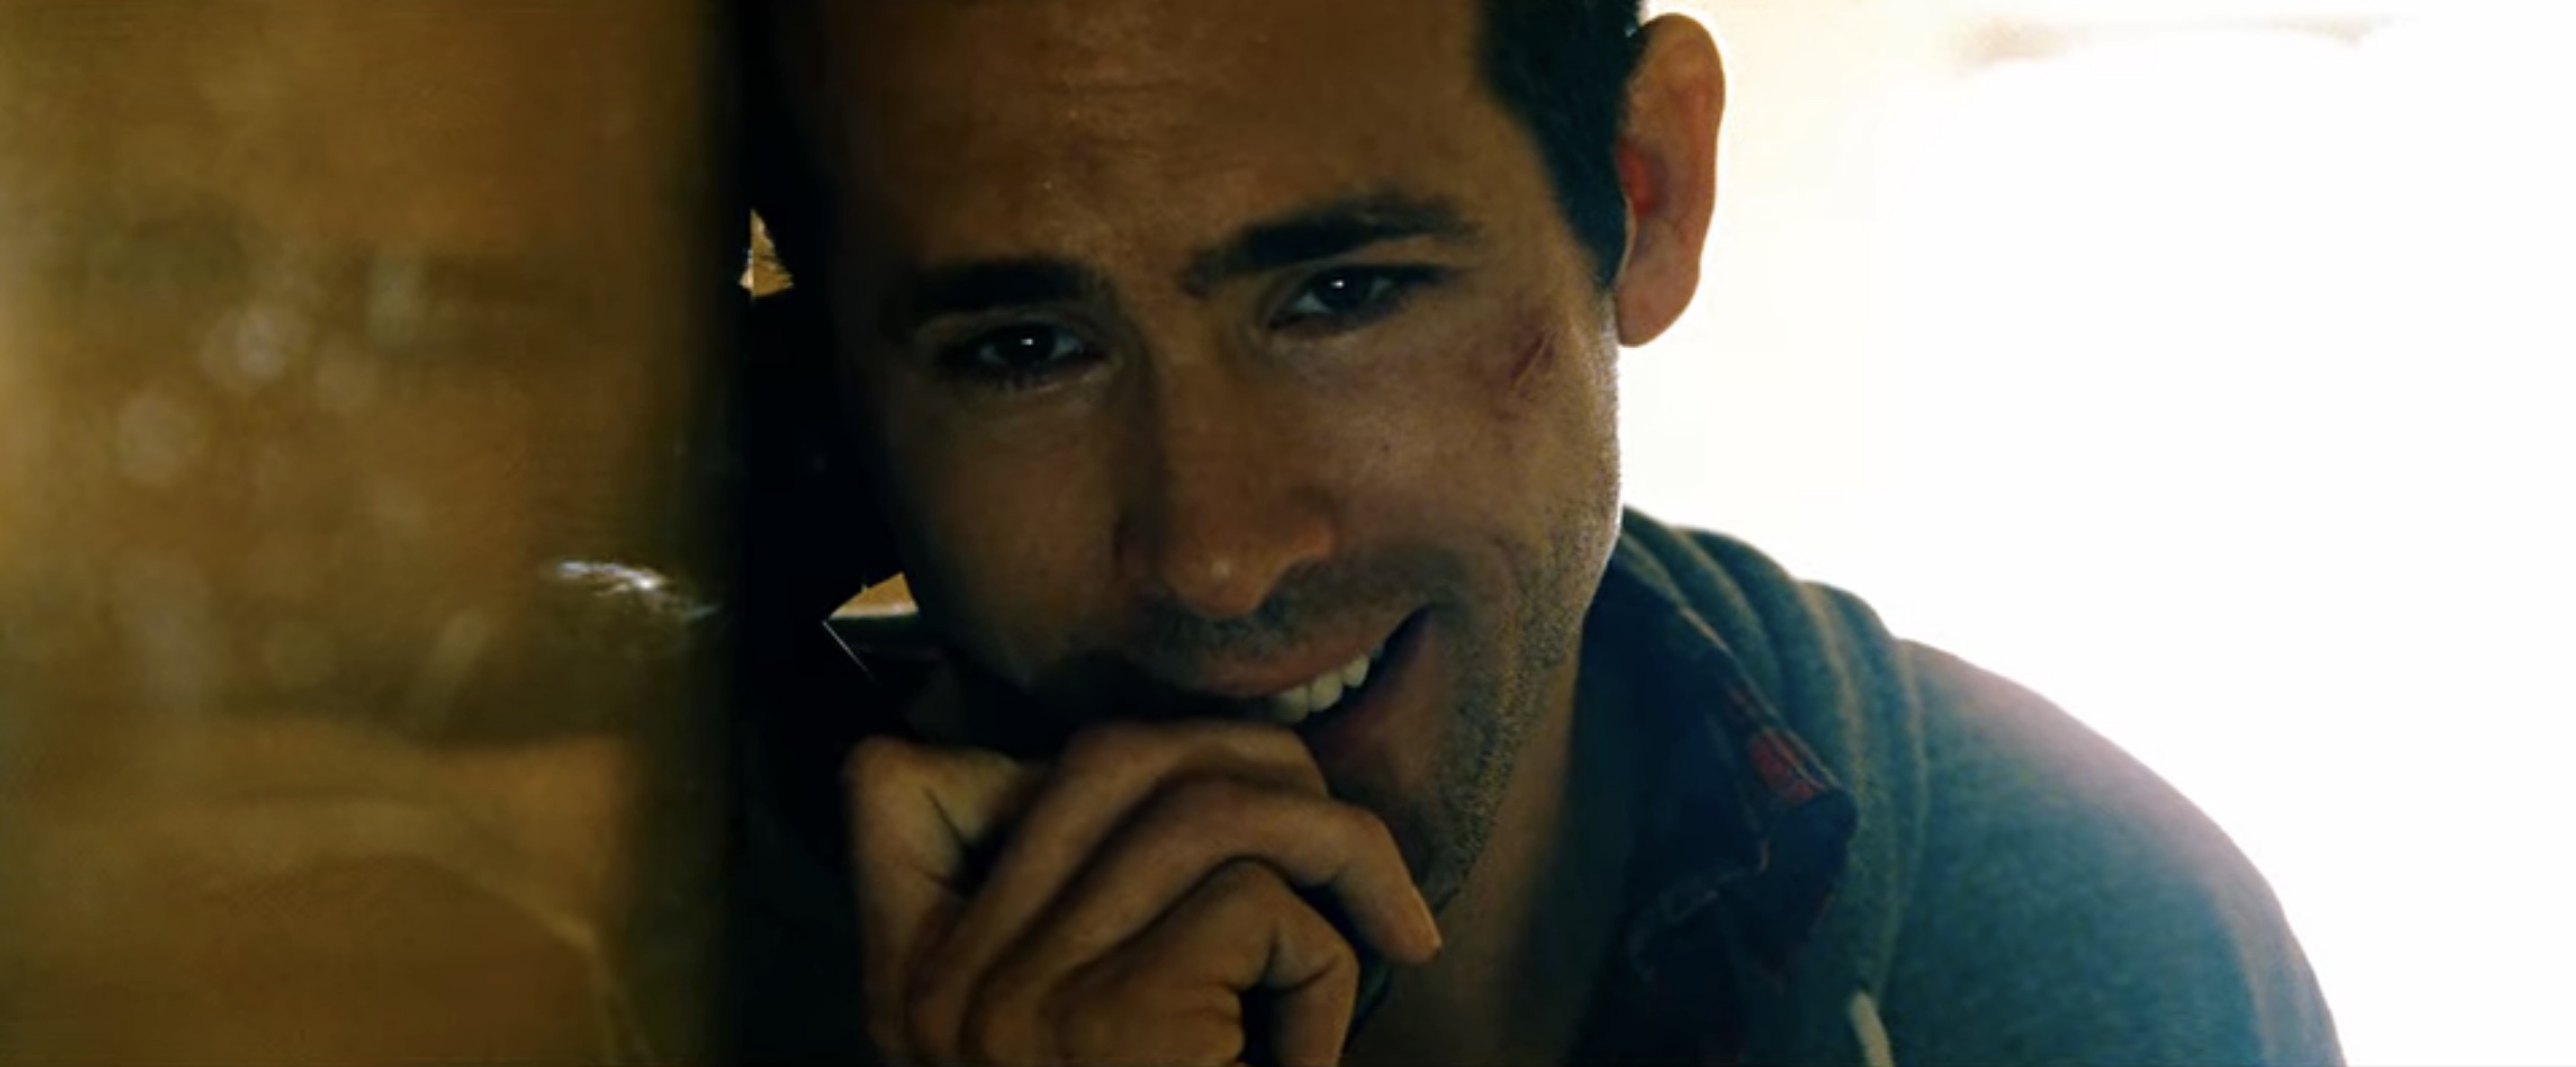 Safe House Cast - Ryan Reynolds as Matt Weston